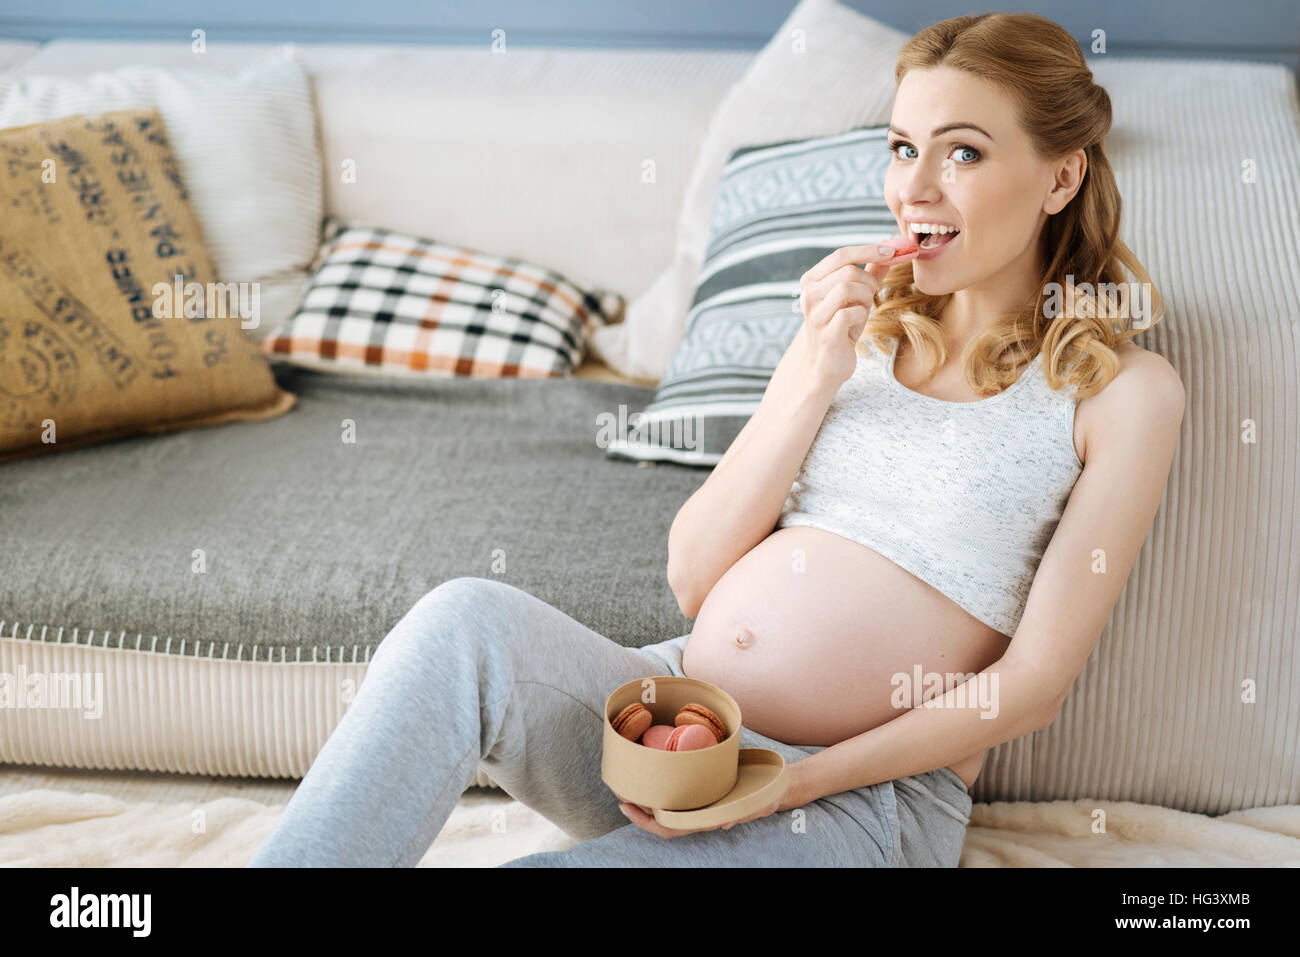 Pregnant joyful woman eating macaroons Stock Photo